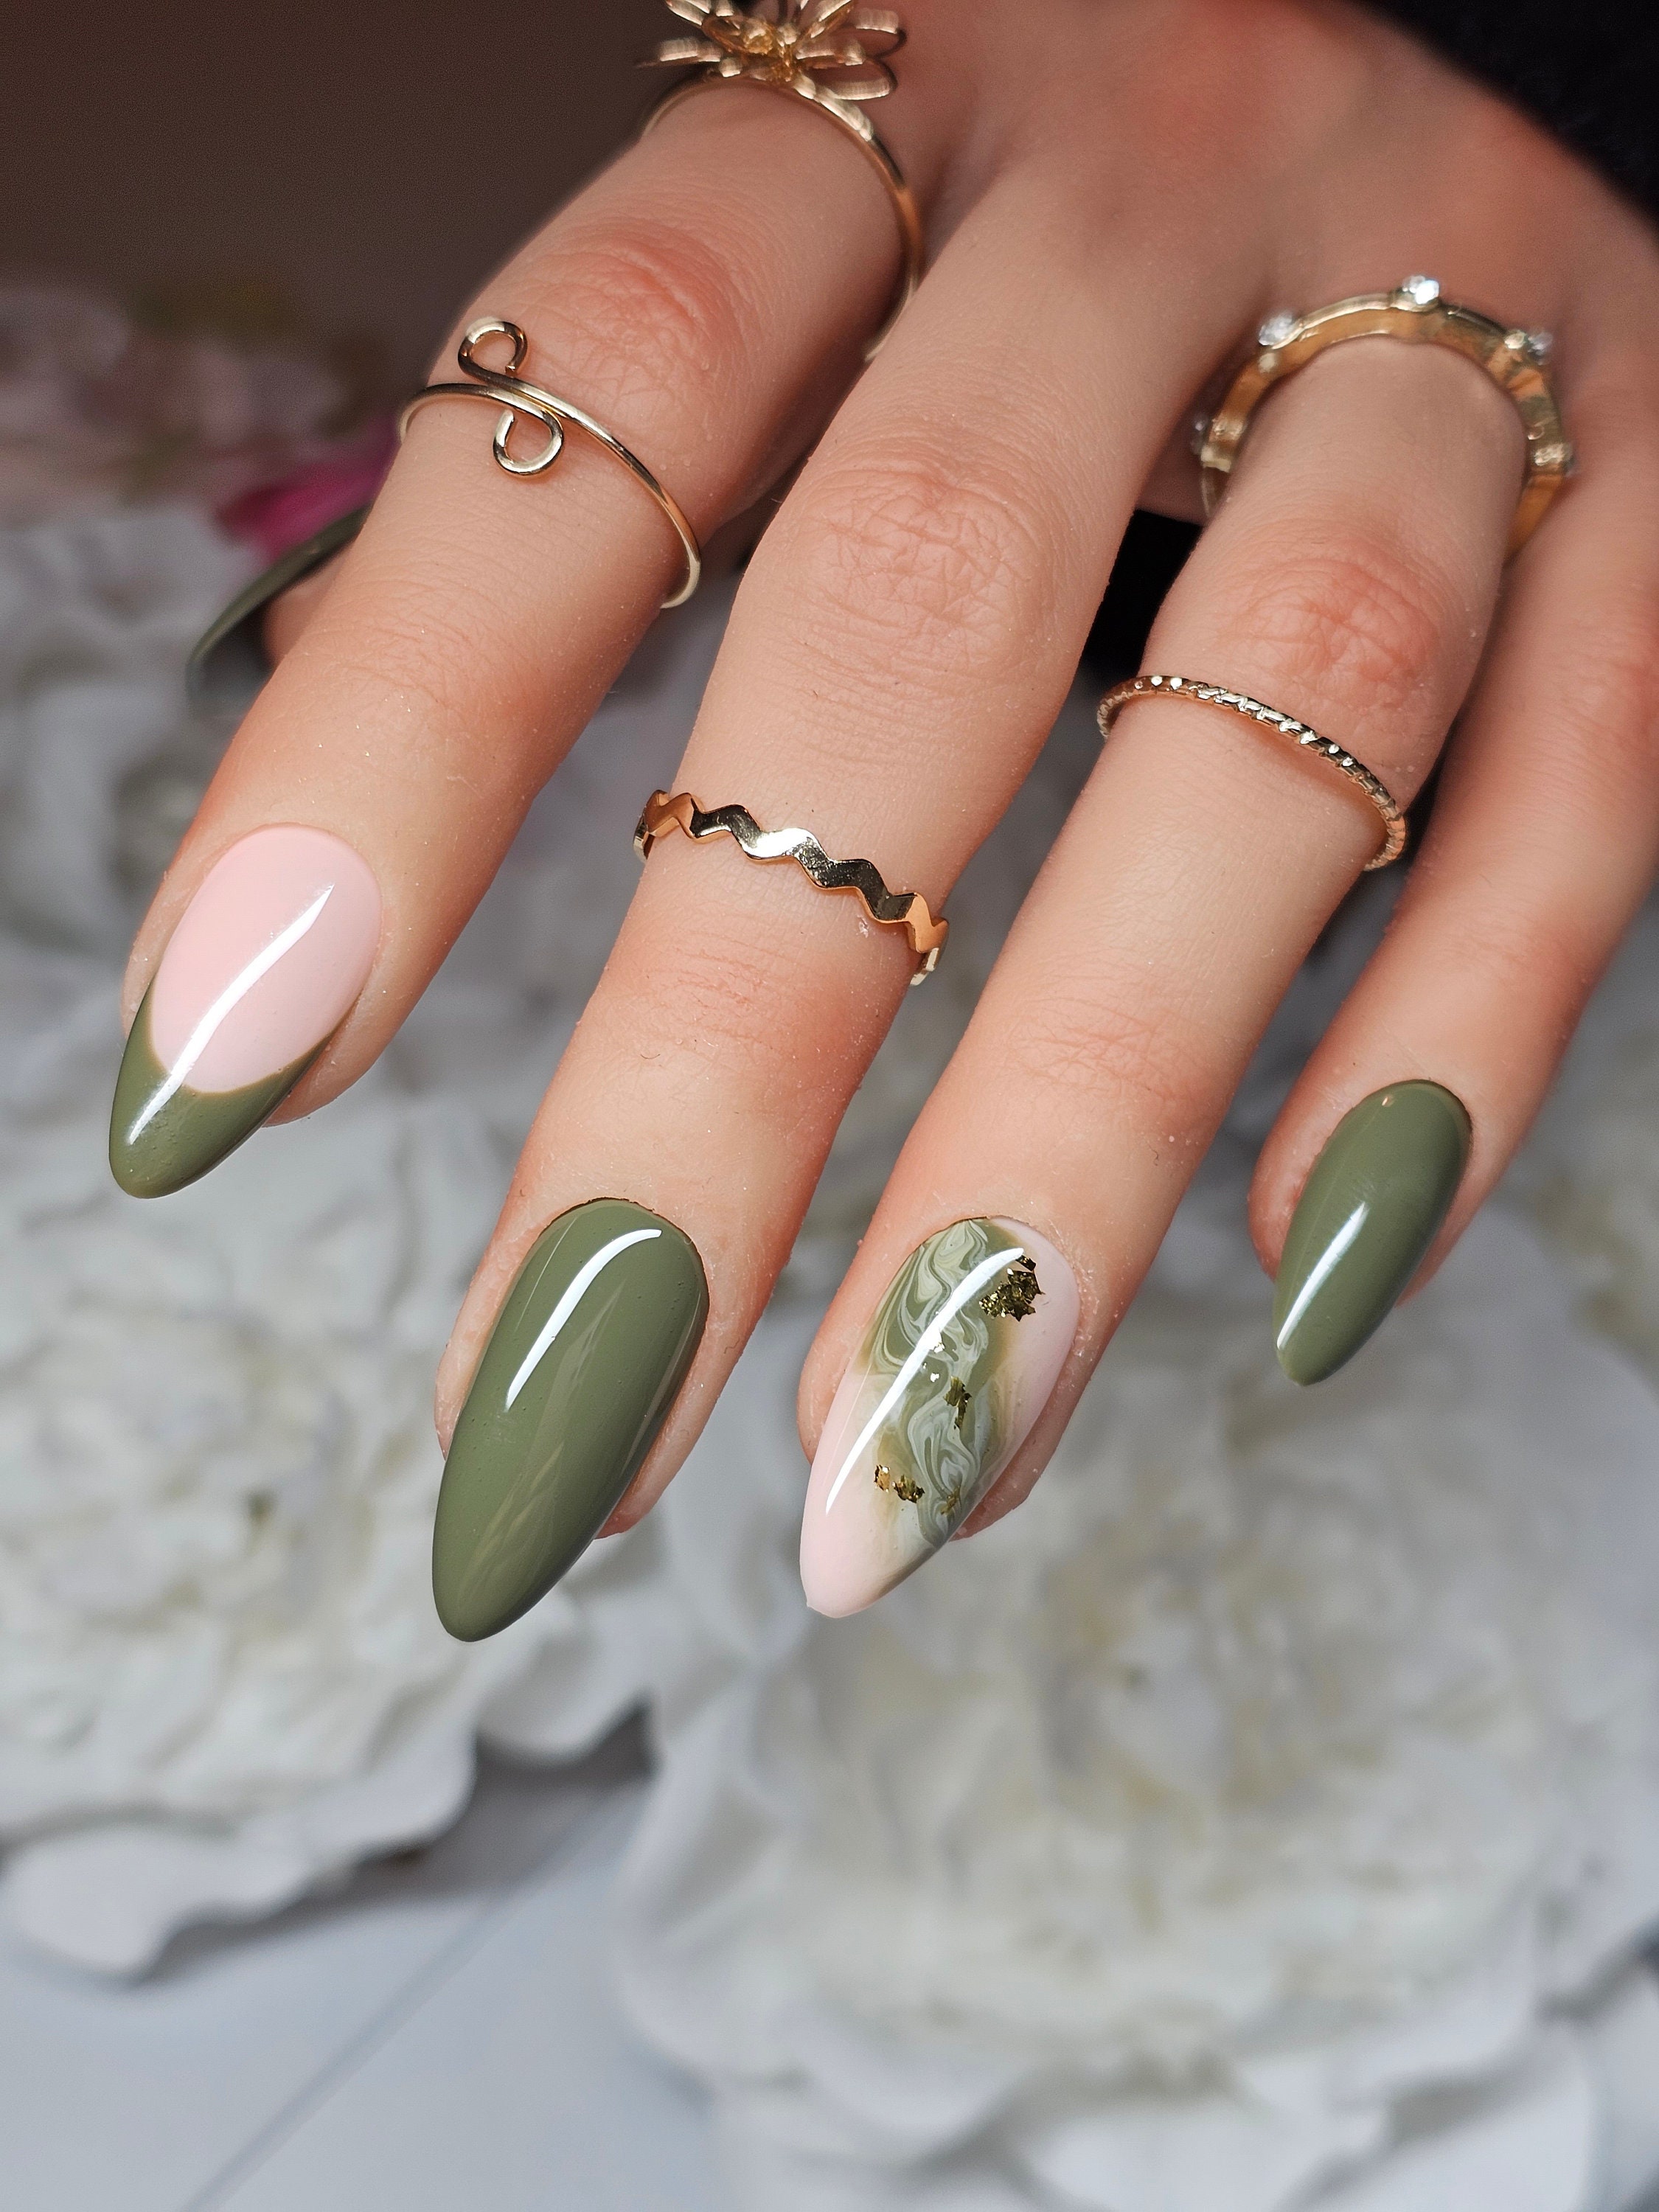 Olive nails